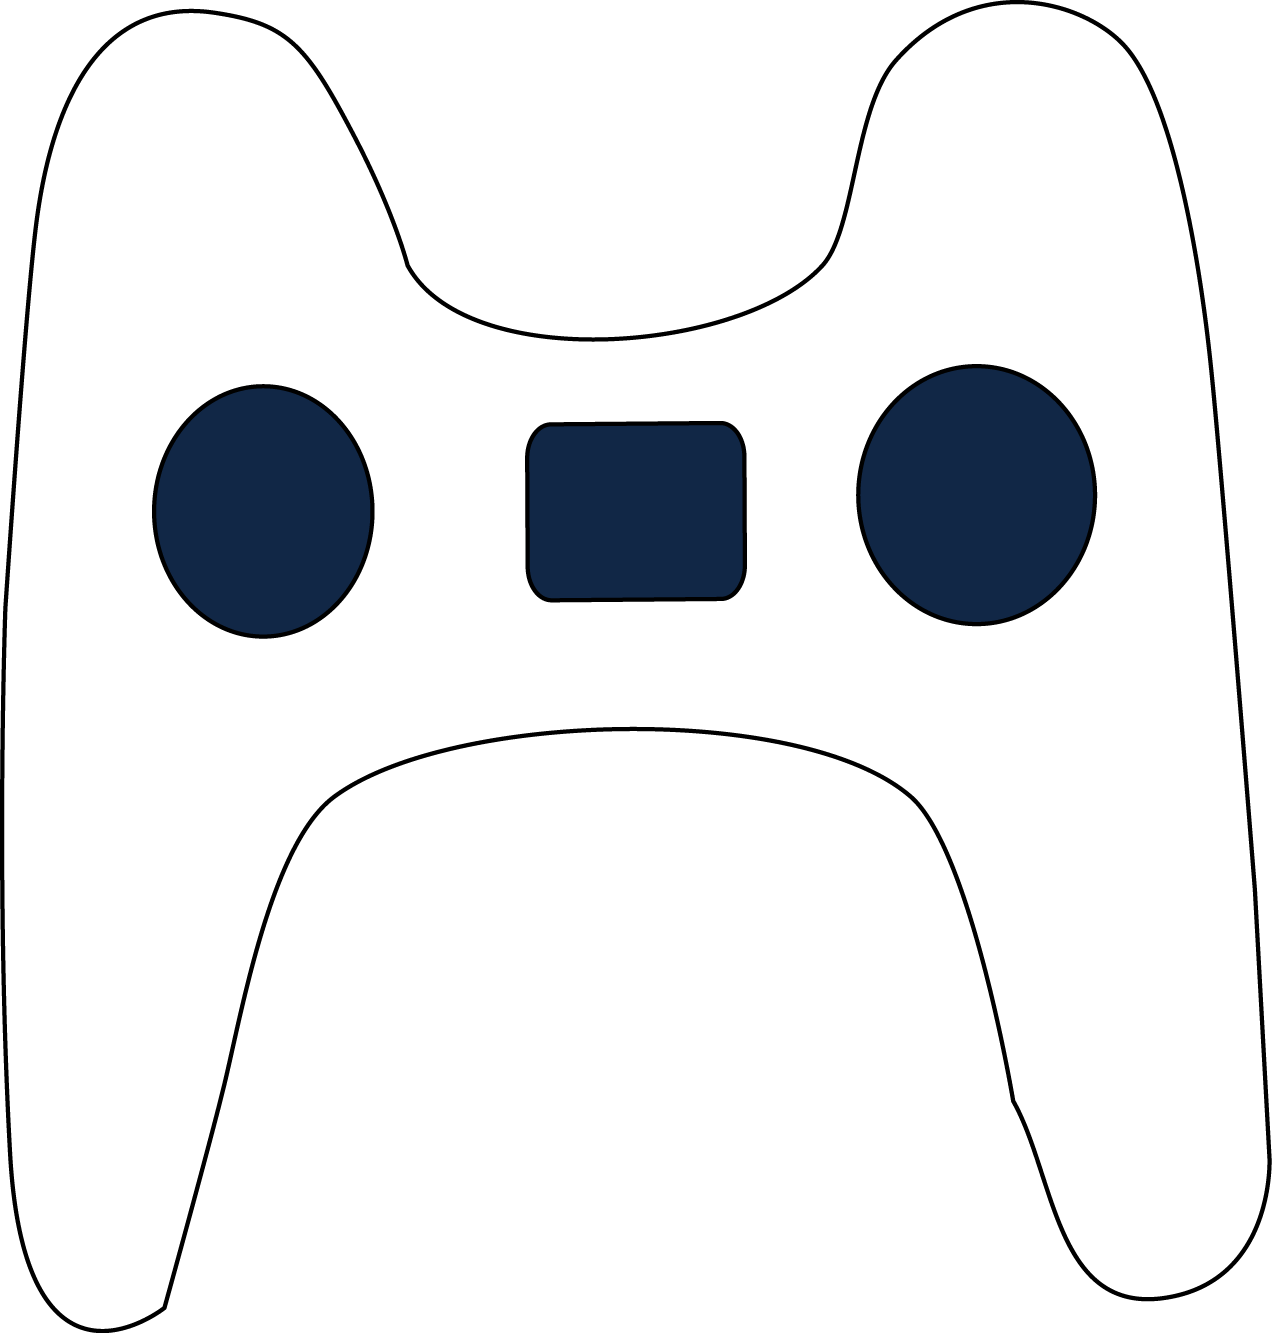 Game Development - Game Controller (1272x1333)